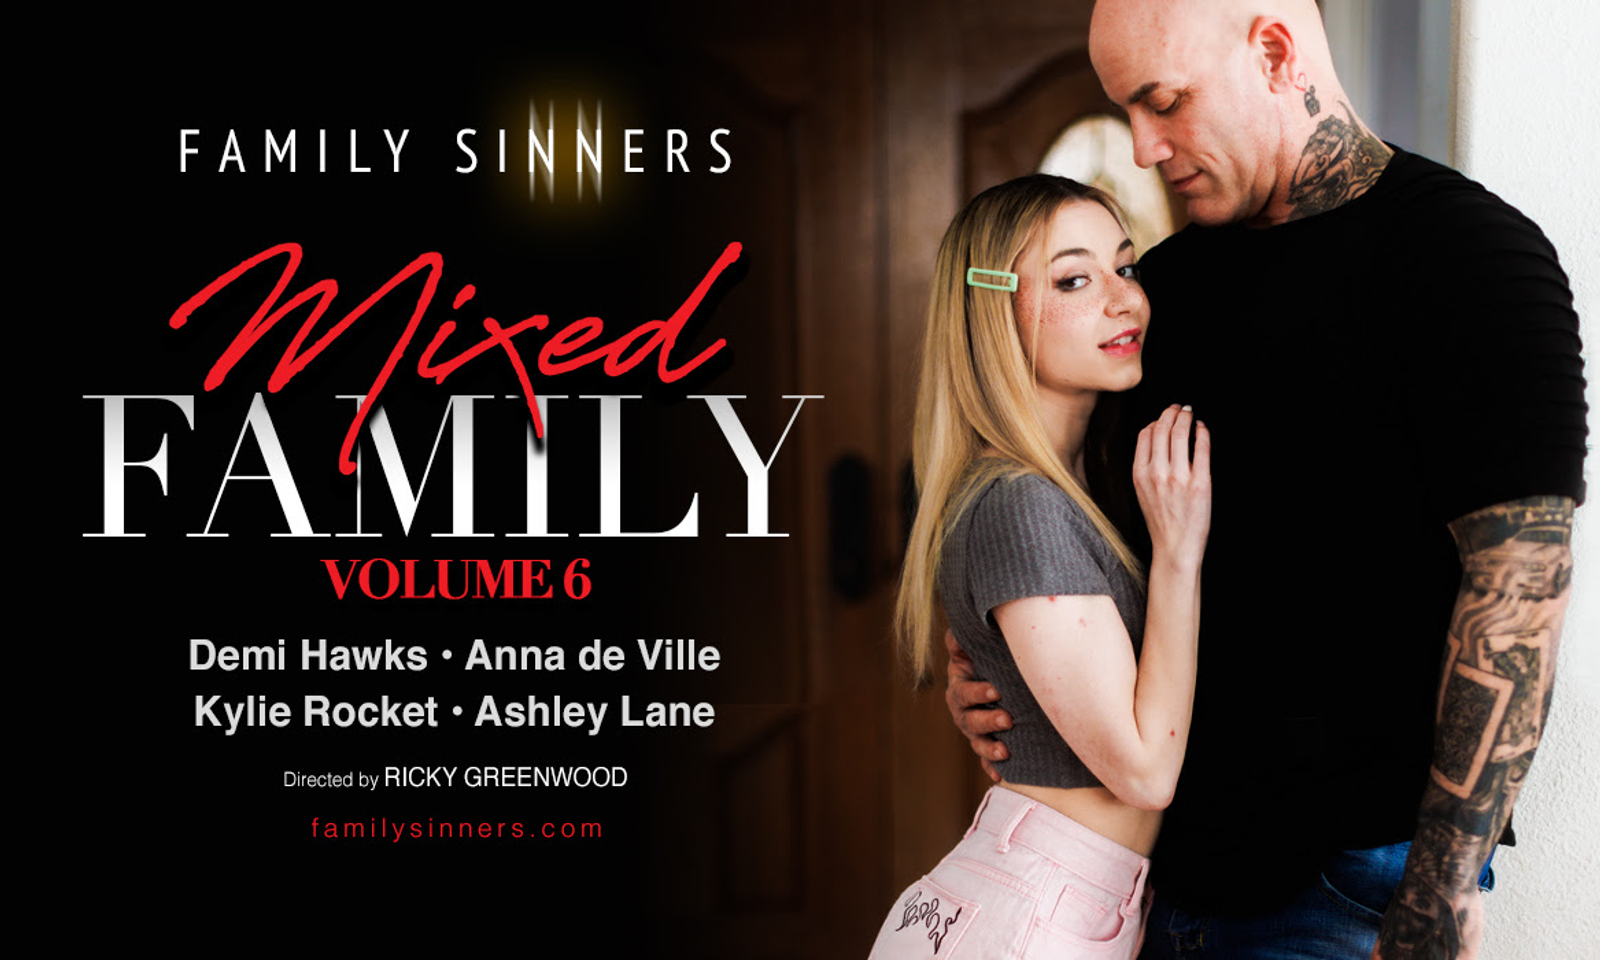 Family Sinners Bows 'Mixed Family 6'